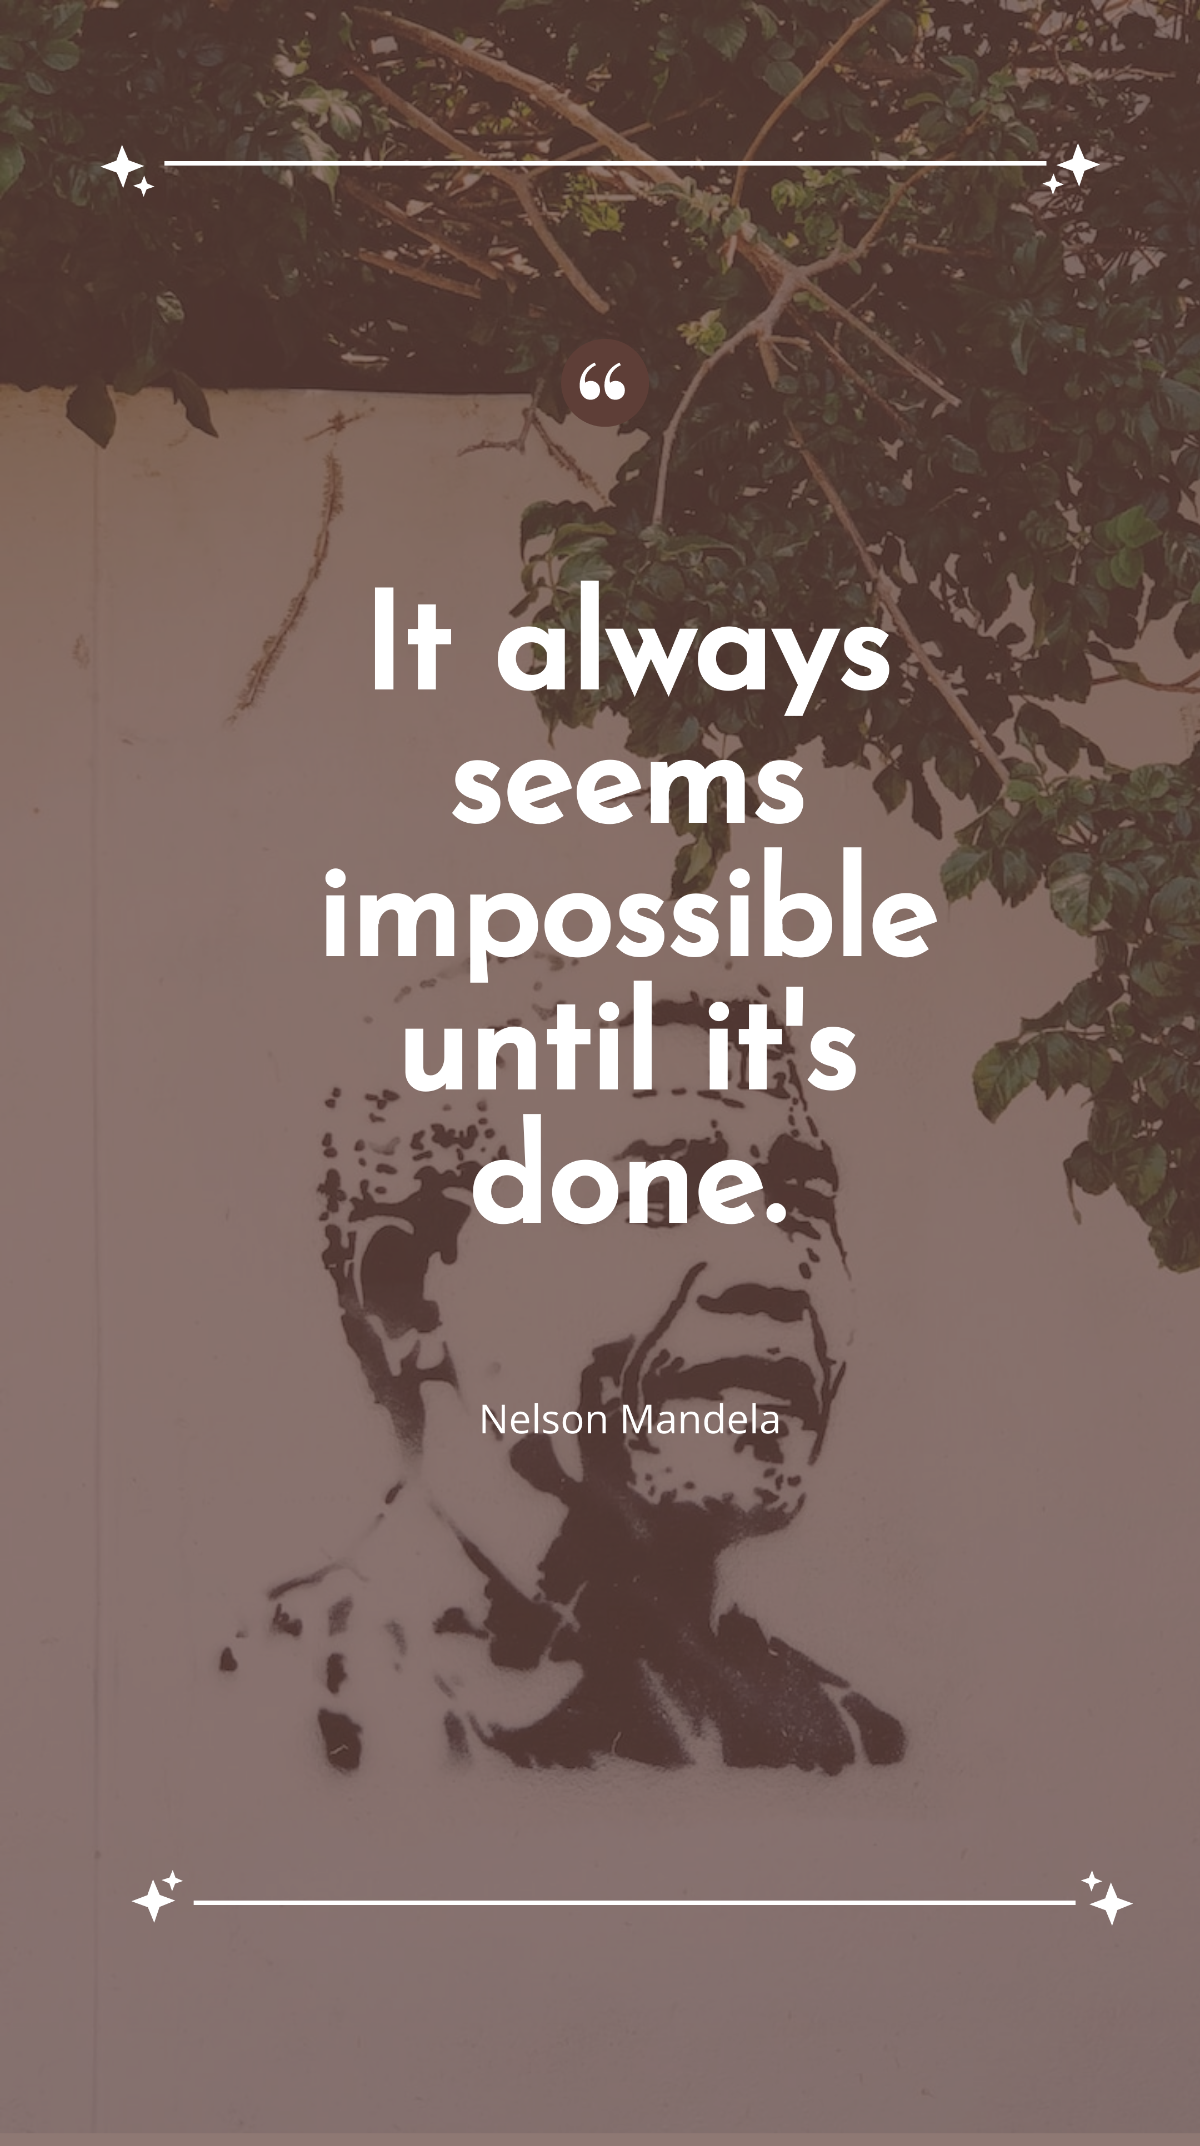 Nelson Mandela - It always seems impossible until it's done